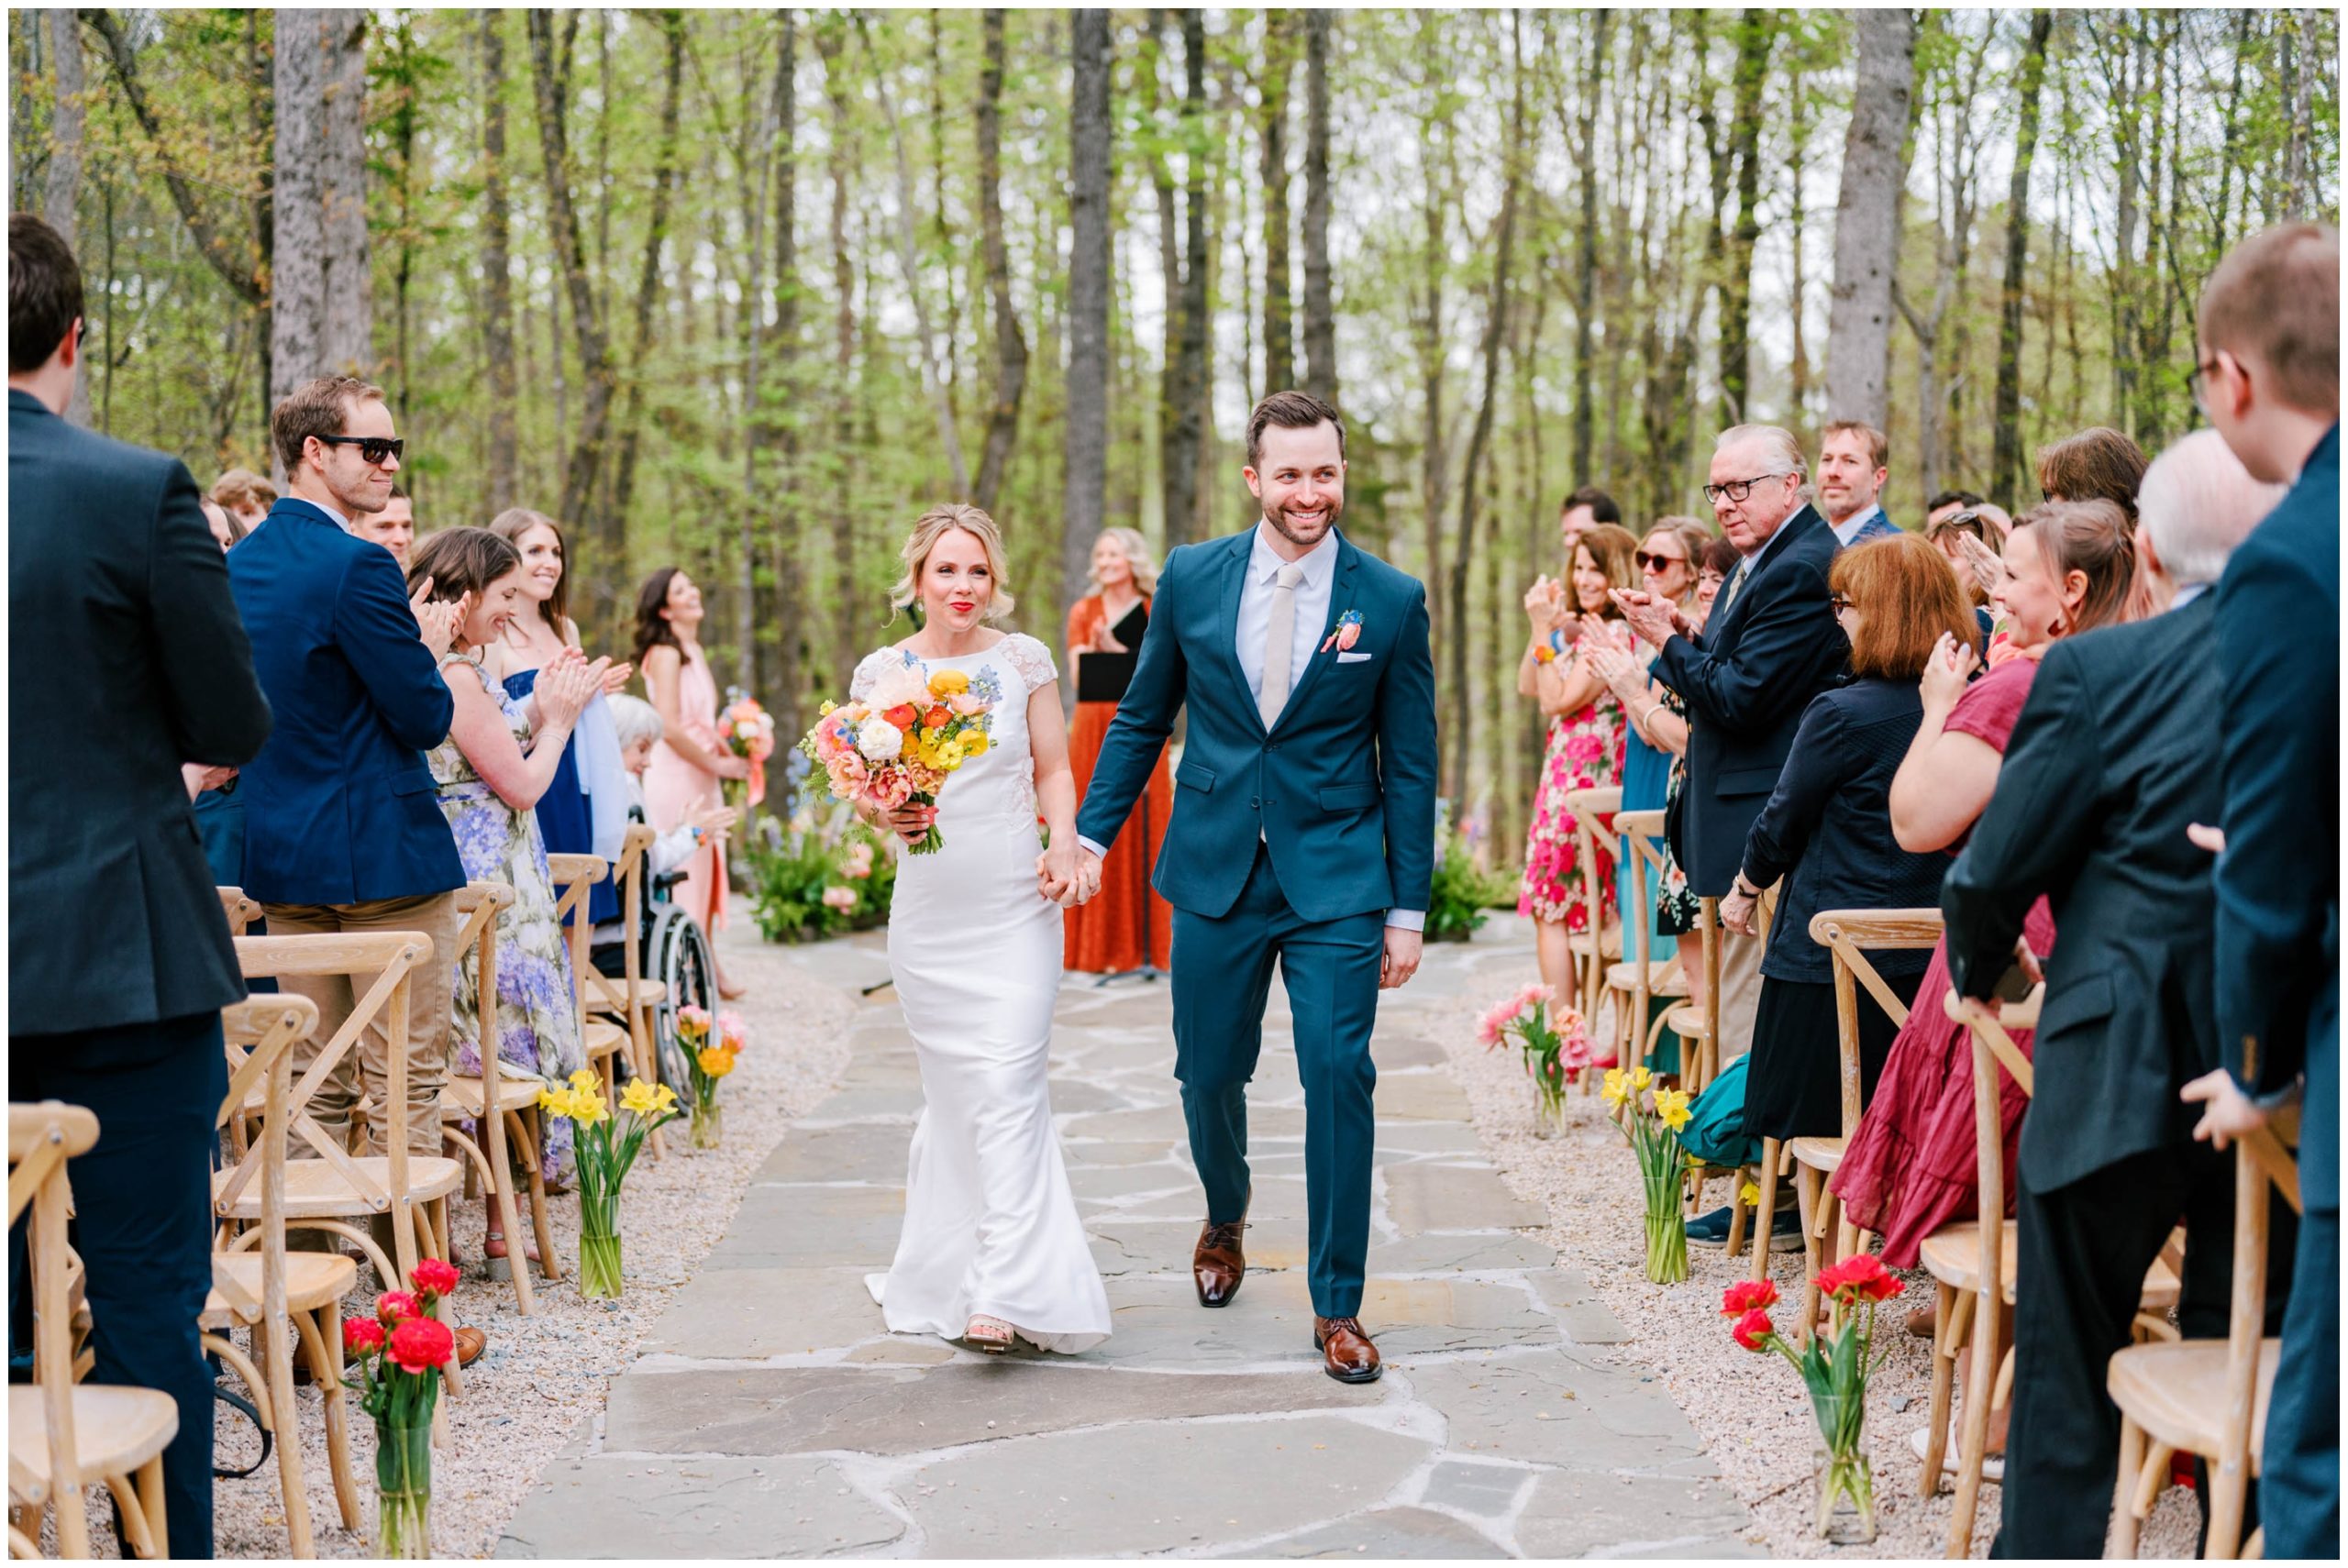 Outdoor wedding ceremony at Carolina Grove